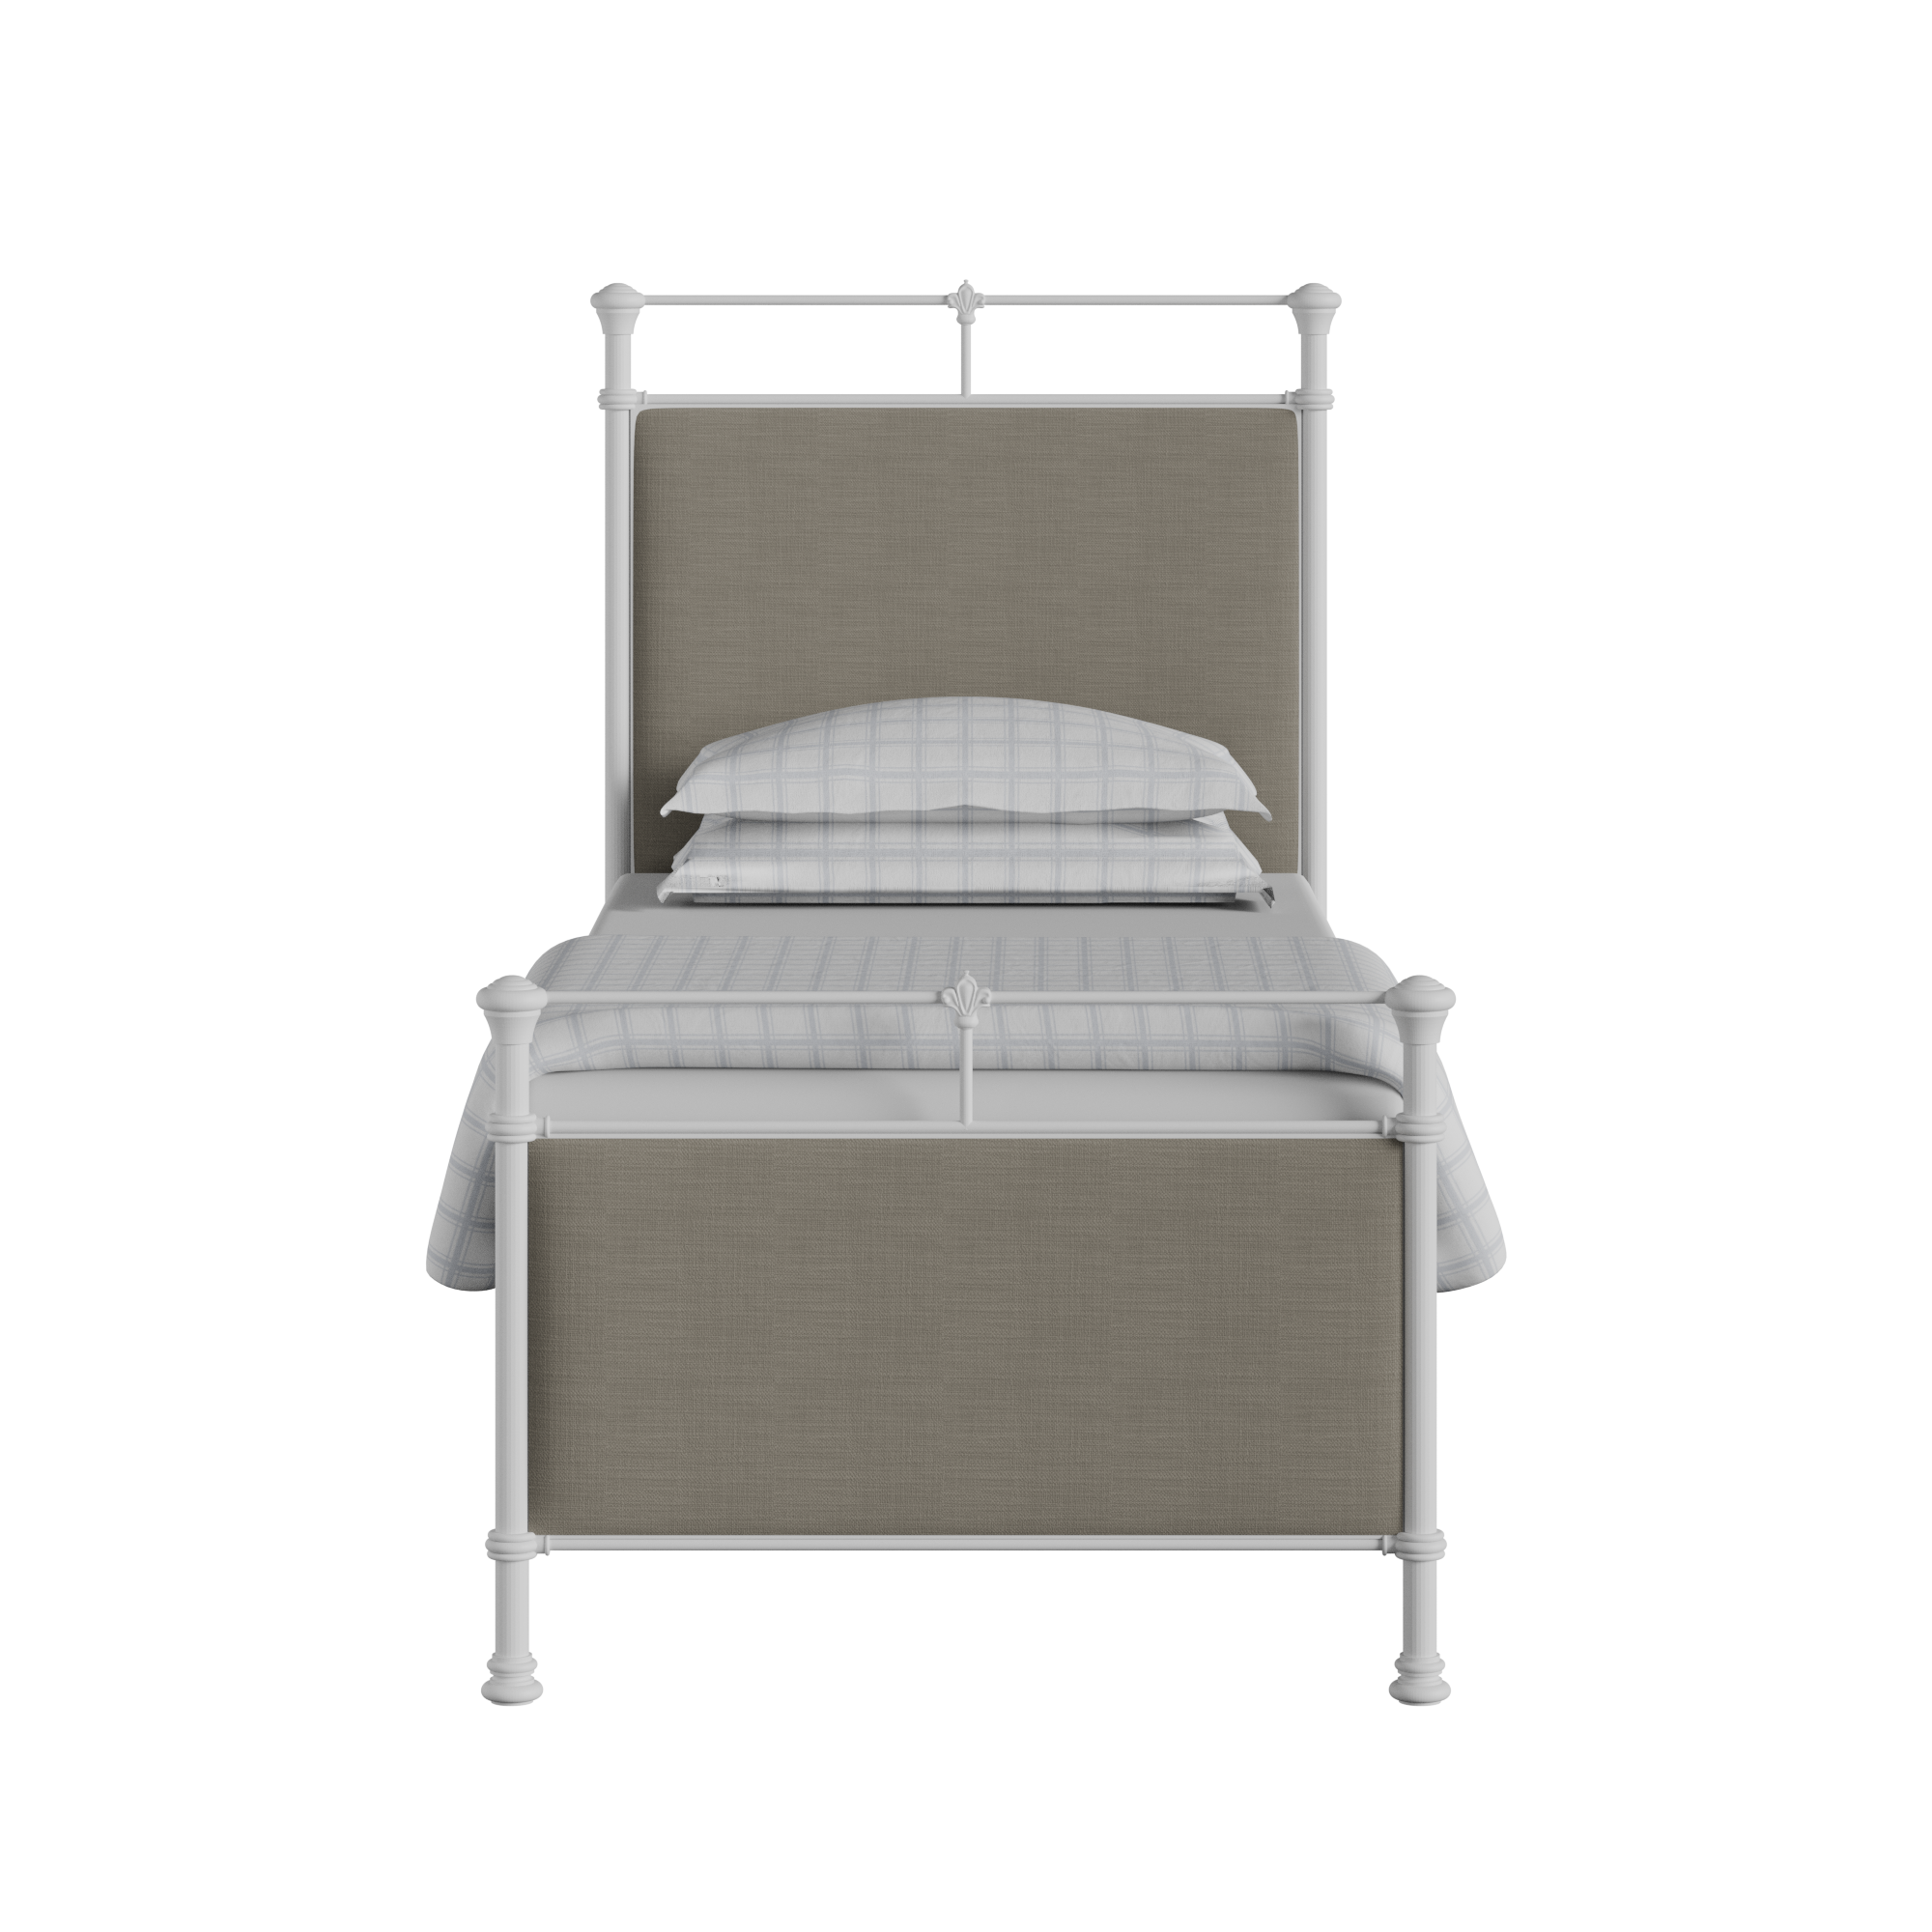 Nancy iron/metal single bed in white